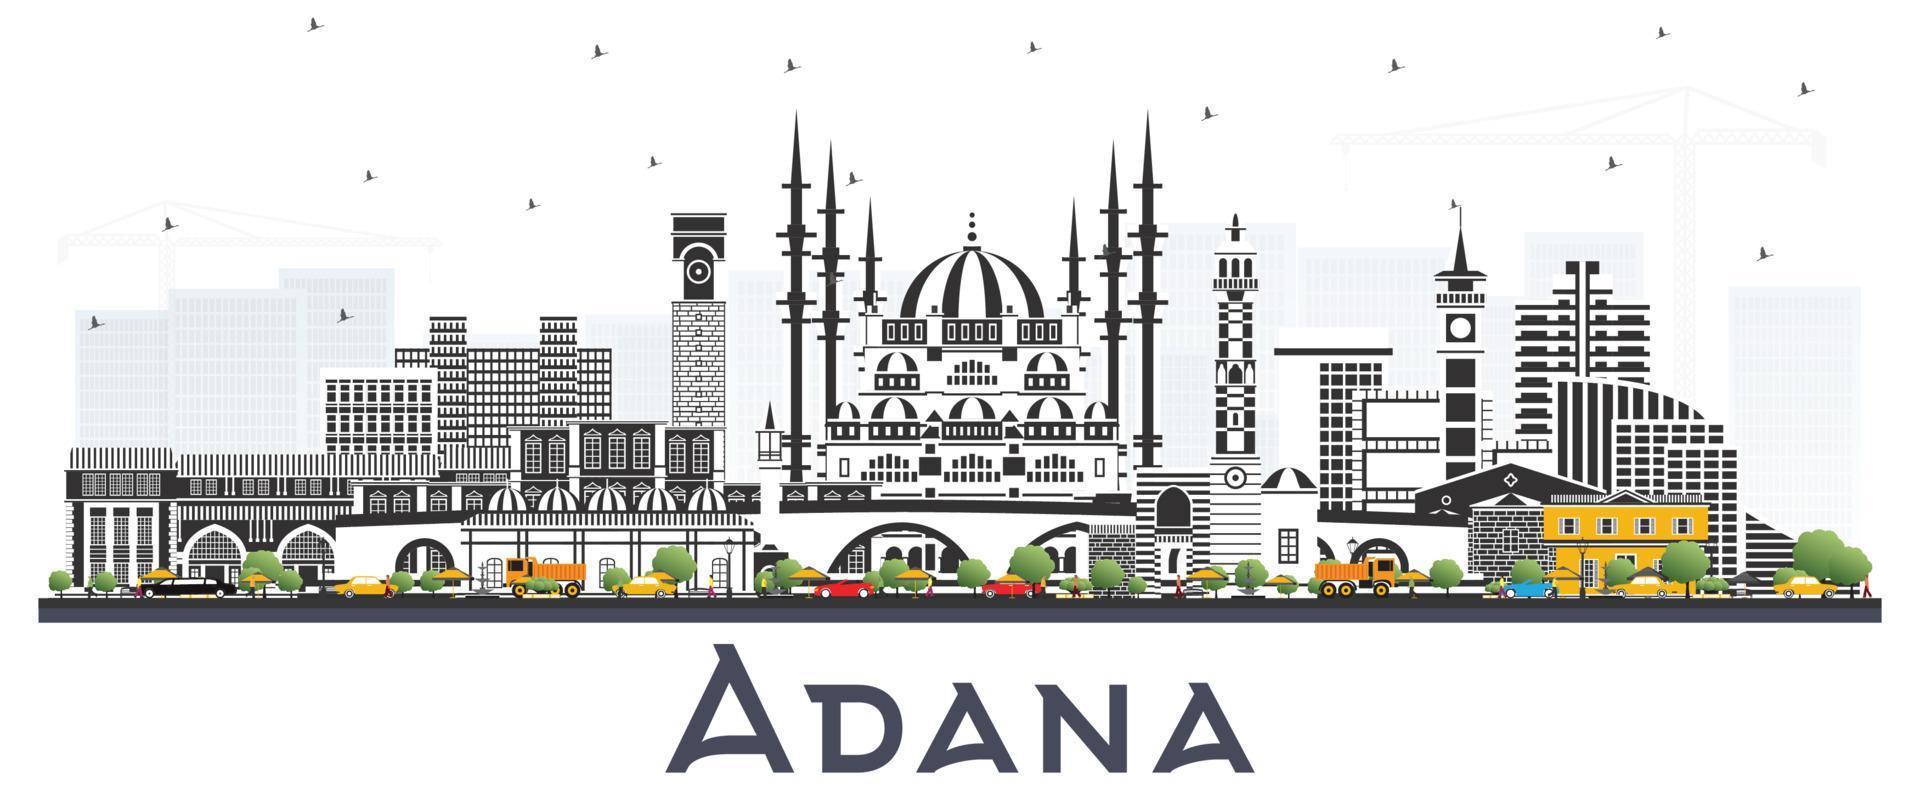 Adana Turkey City Skyline with Color Buildings Isolated on White. vector